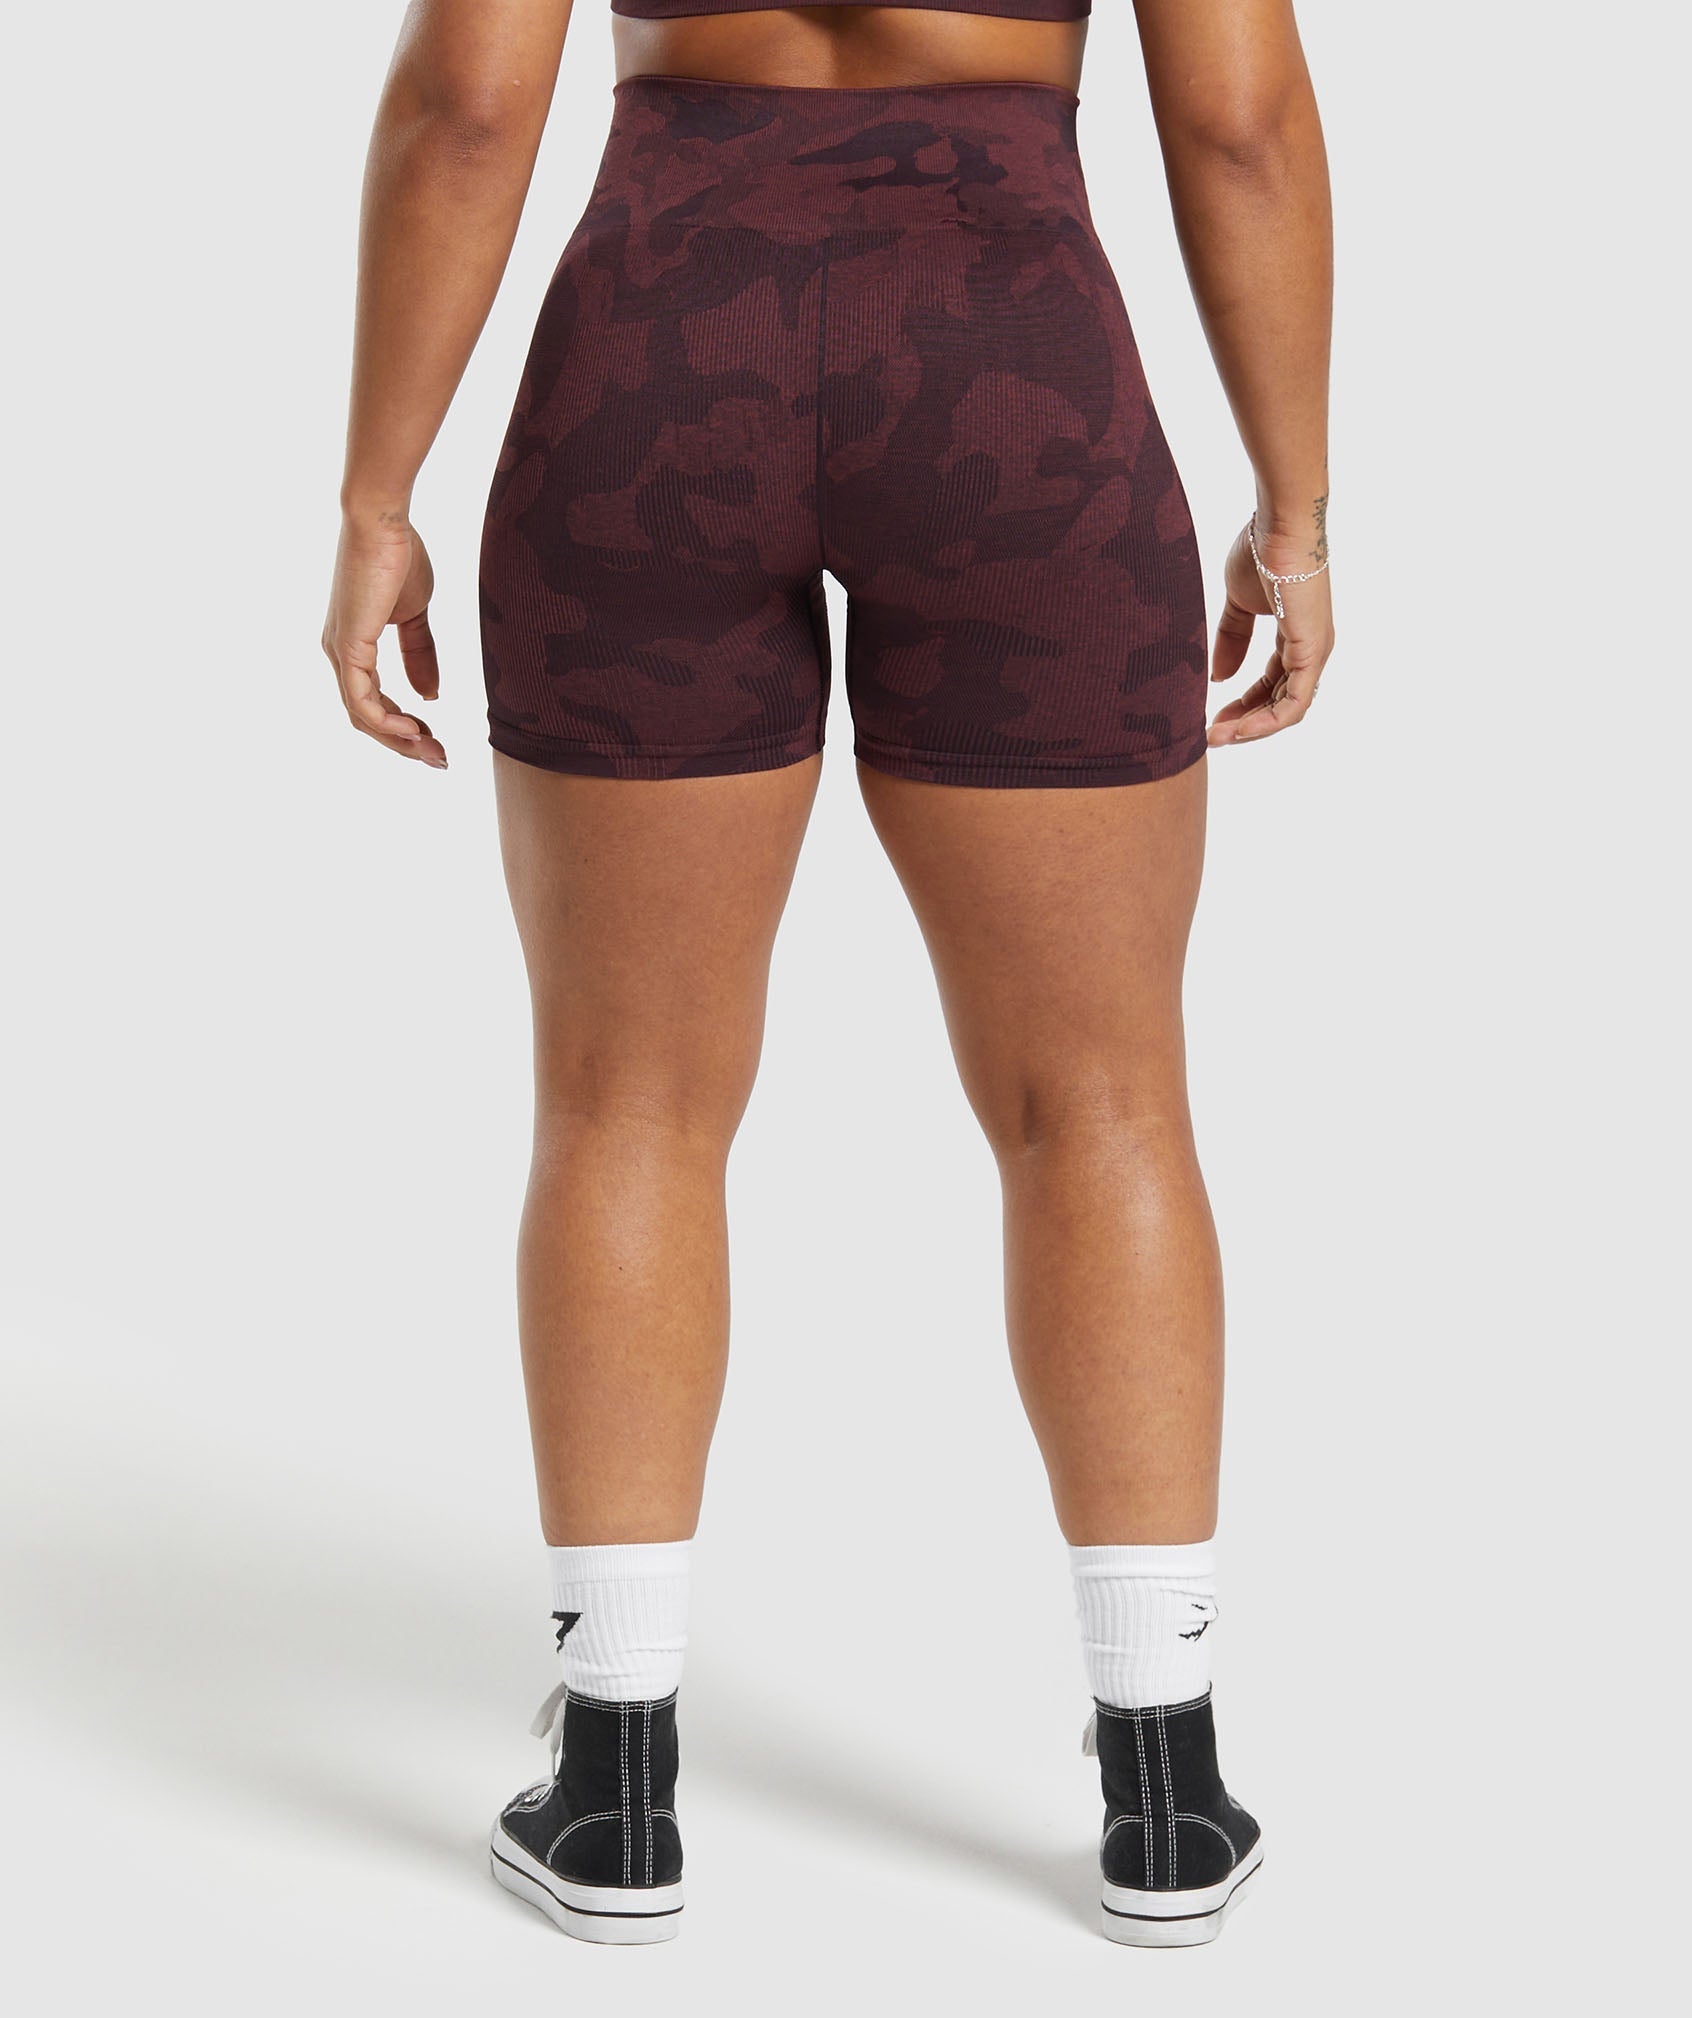 Gymshark Adapt Camo Seamless Shorts - Plum Brown/Burgundy Brown